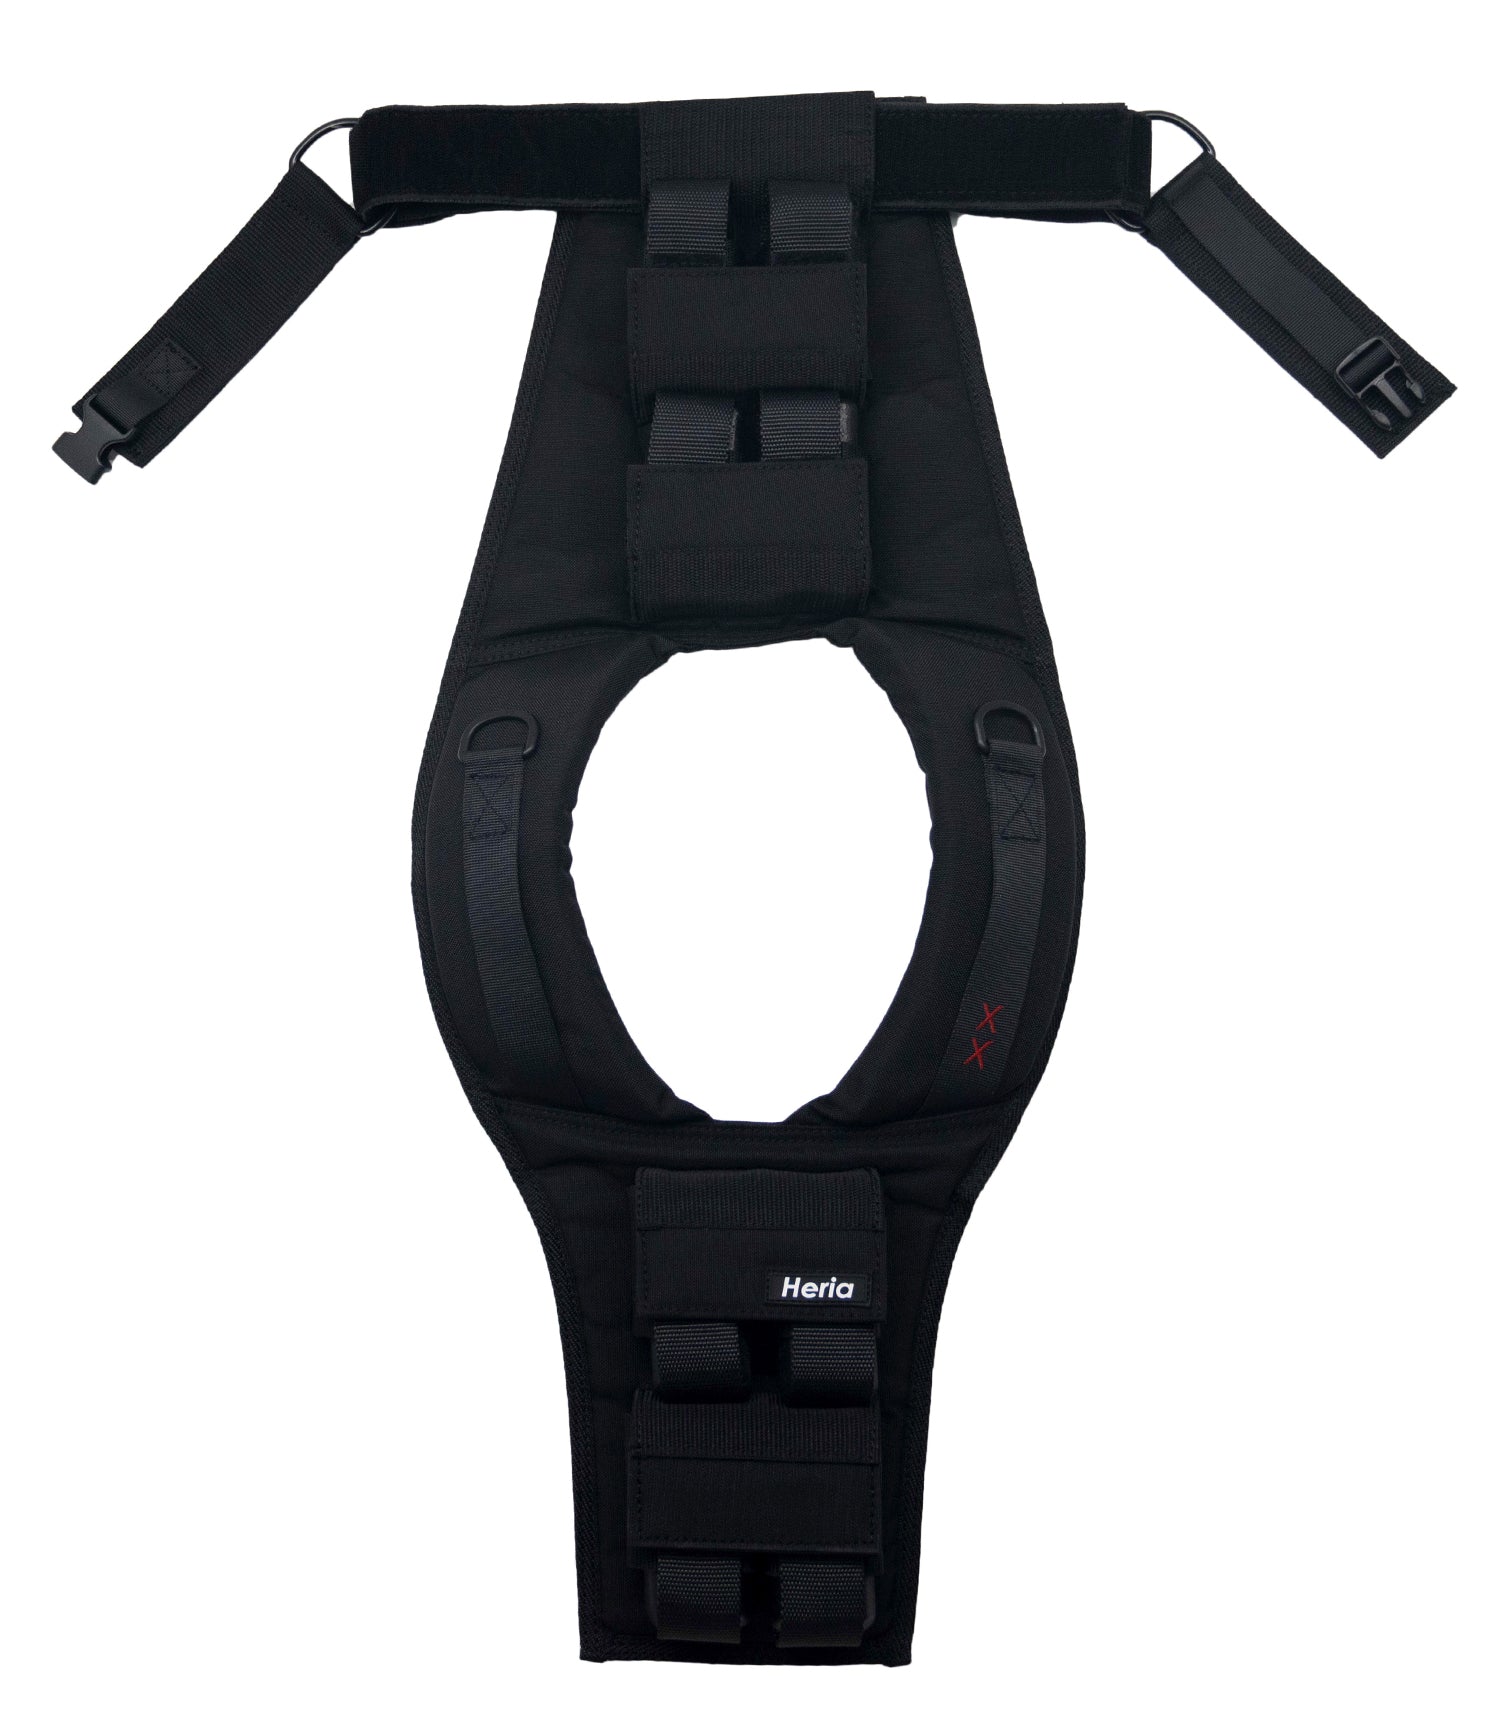 18LB Weight Vest - Black (6669084786730)